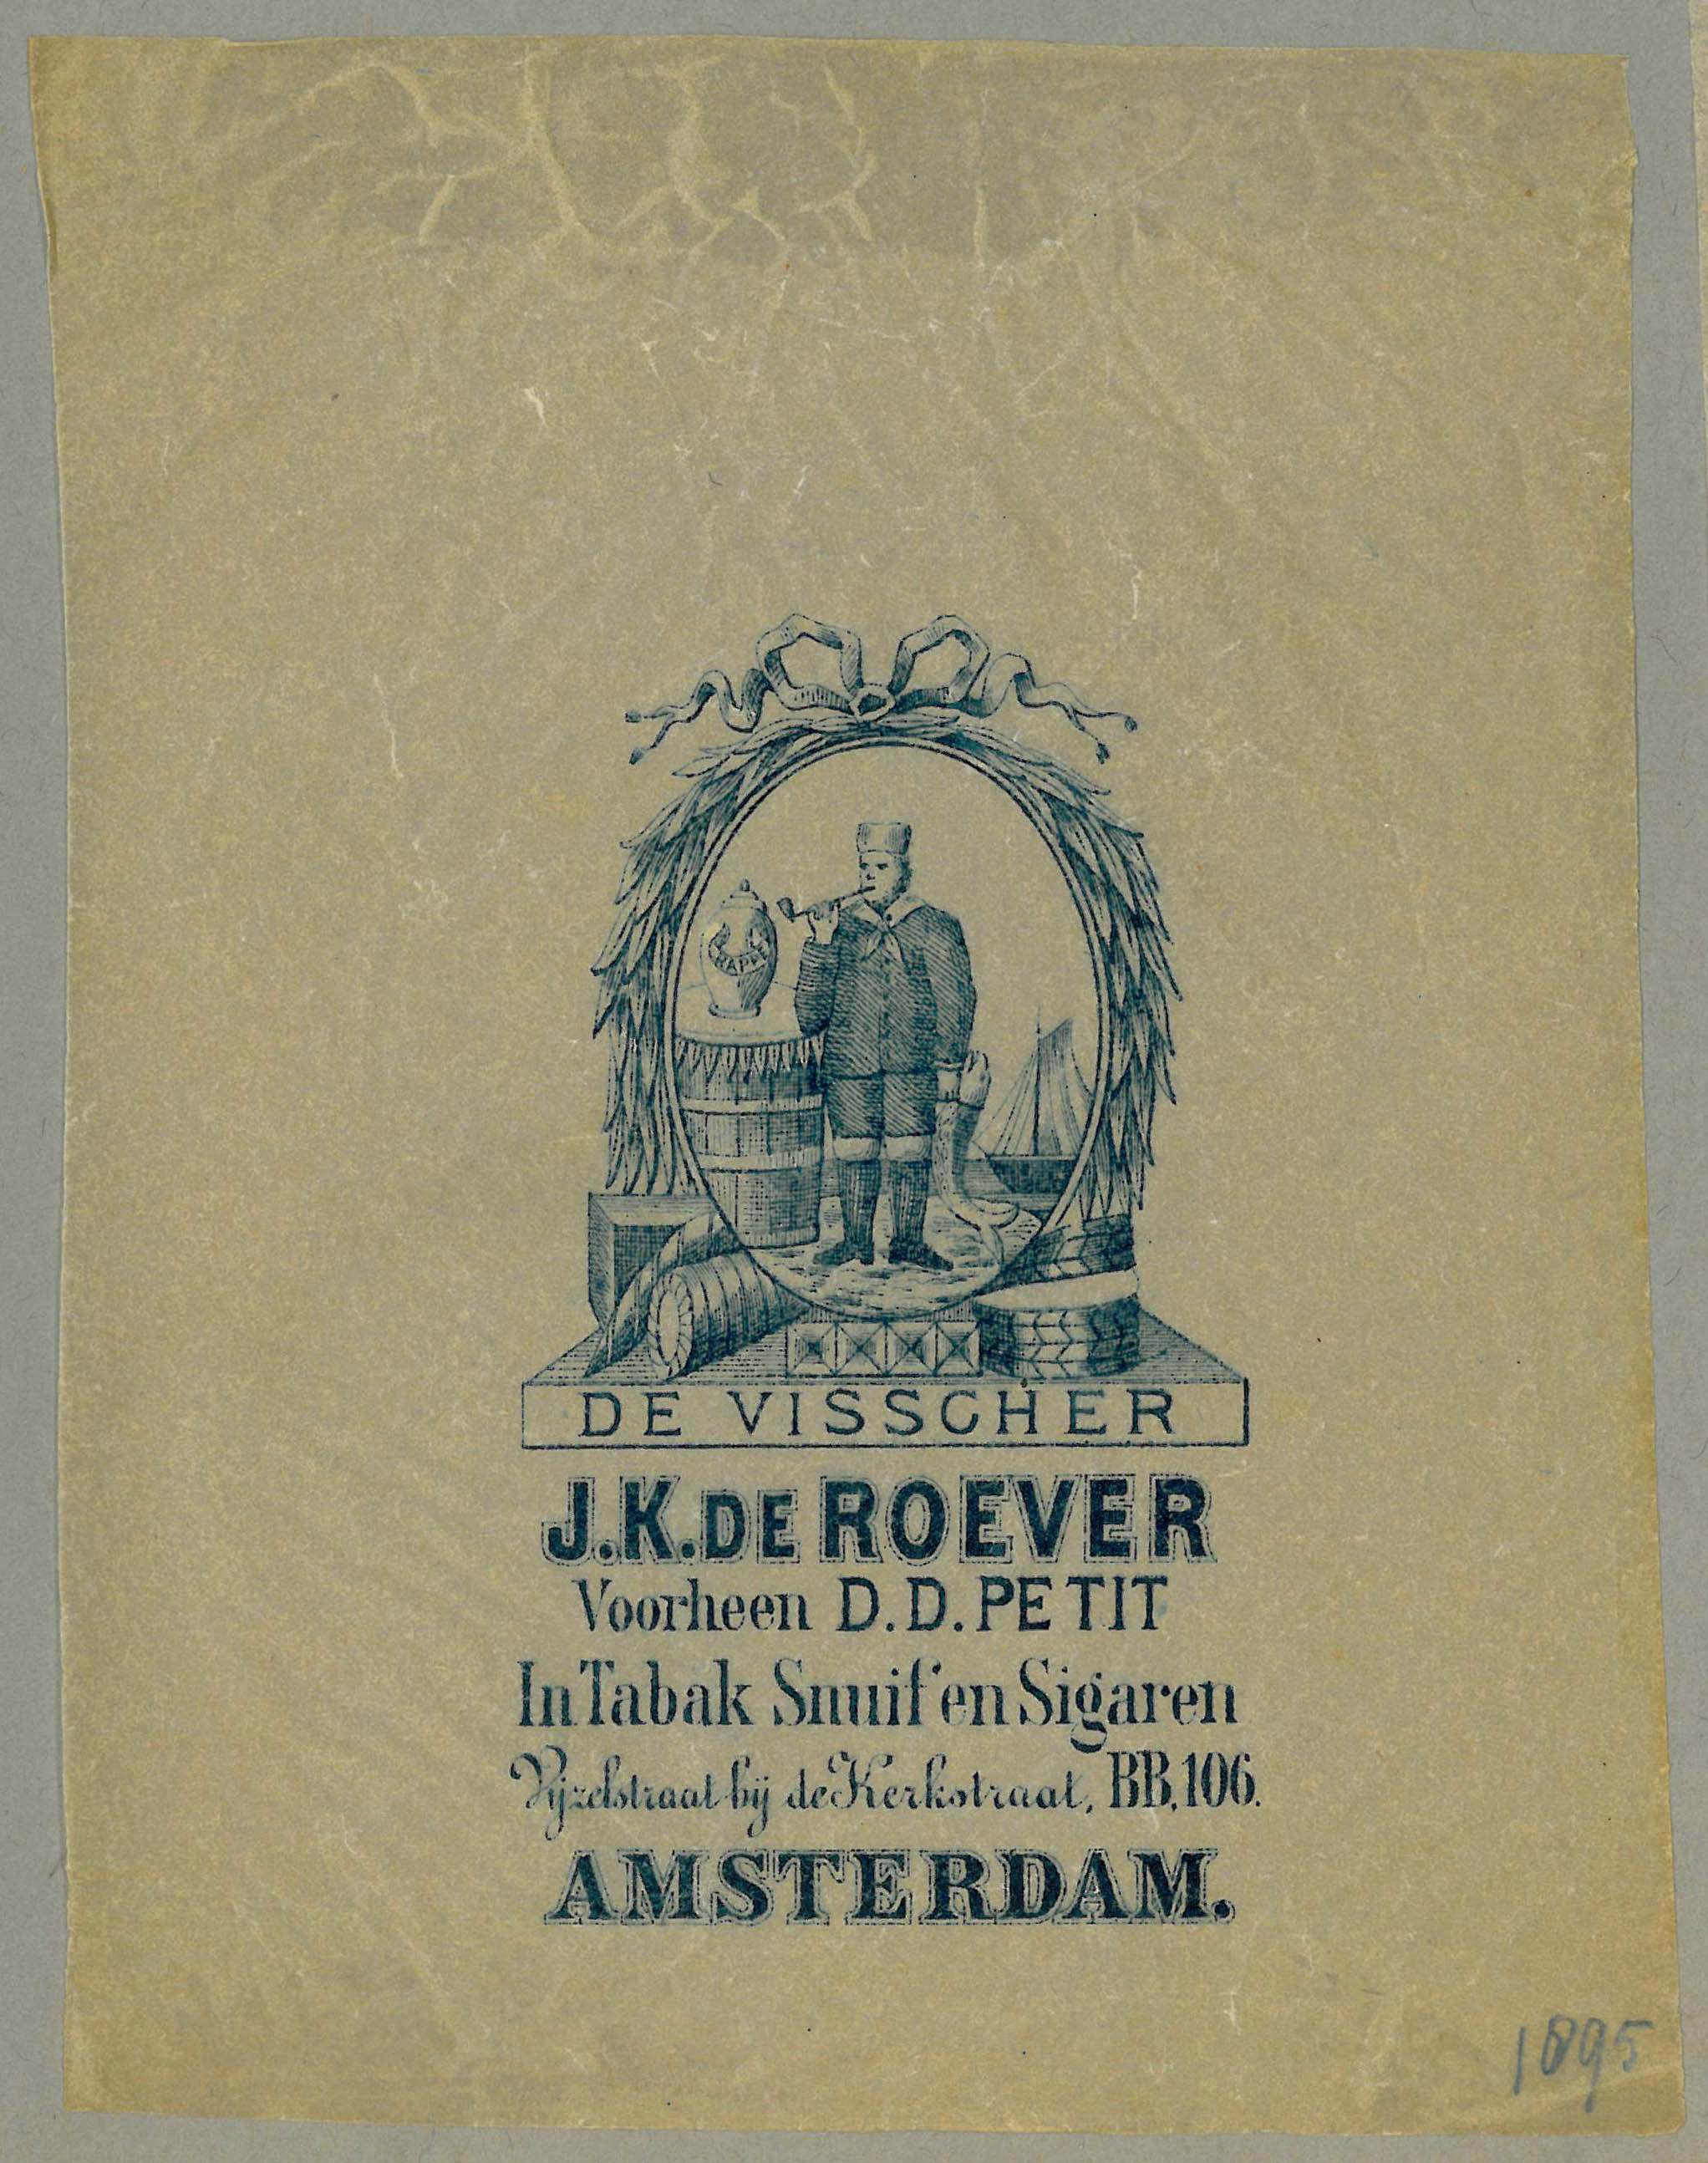 30-26.751-amsterdam-cigar-bag-visser-amsterdam